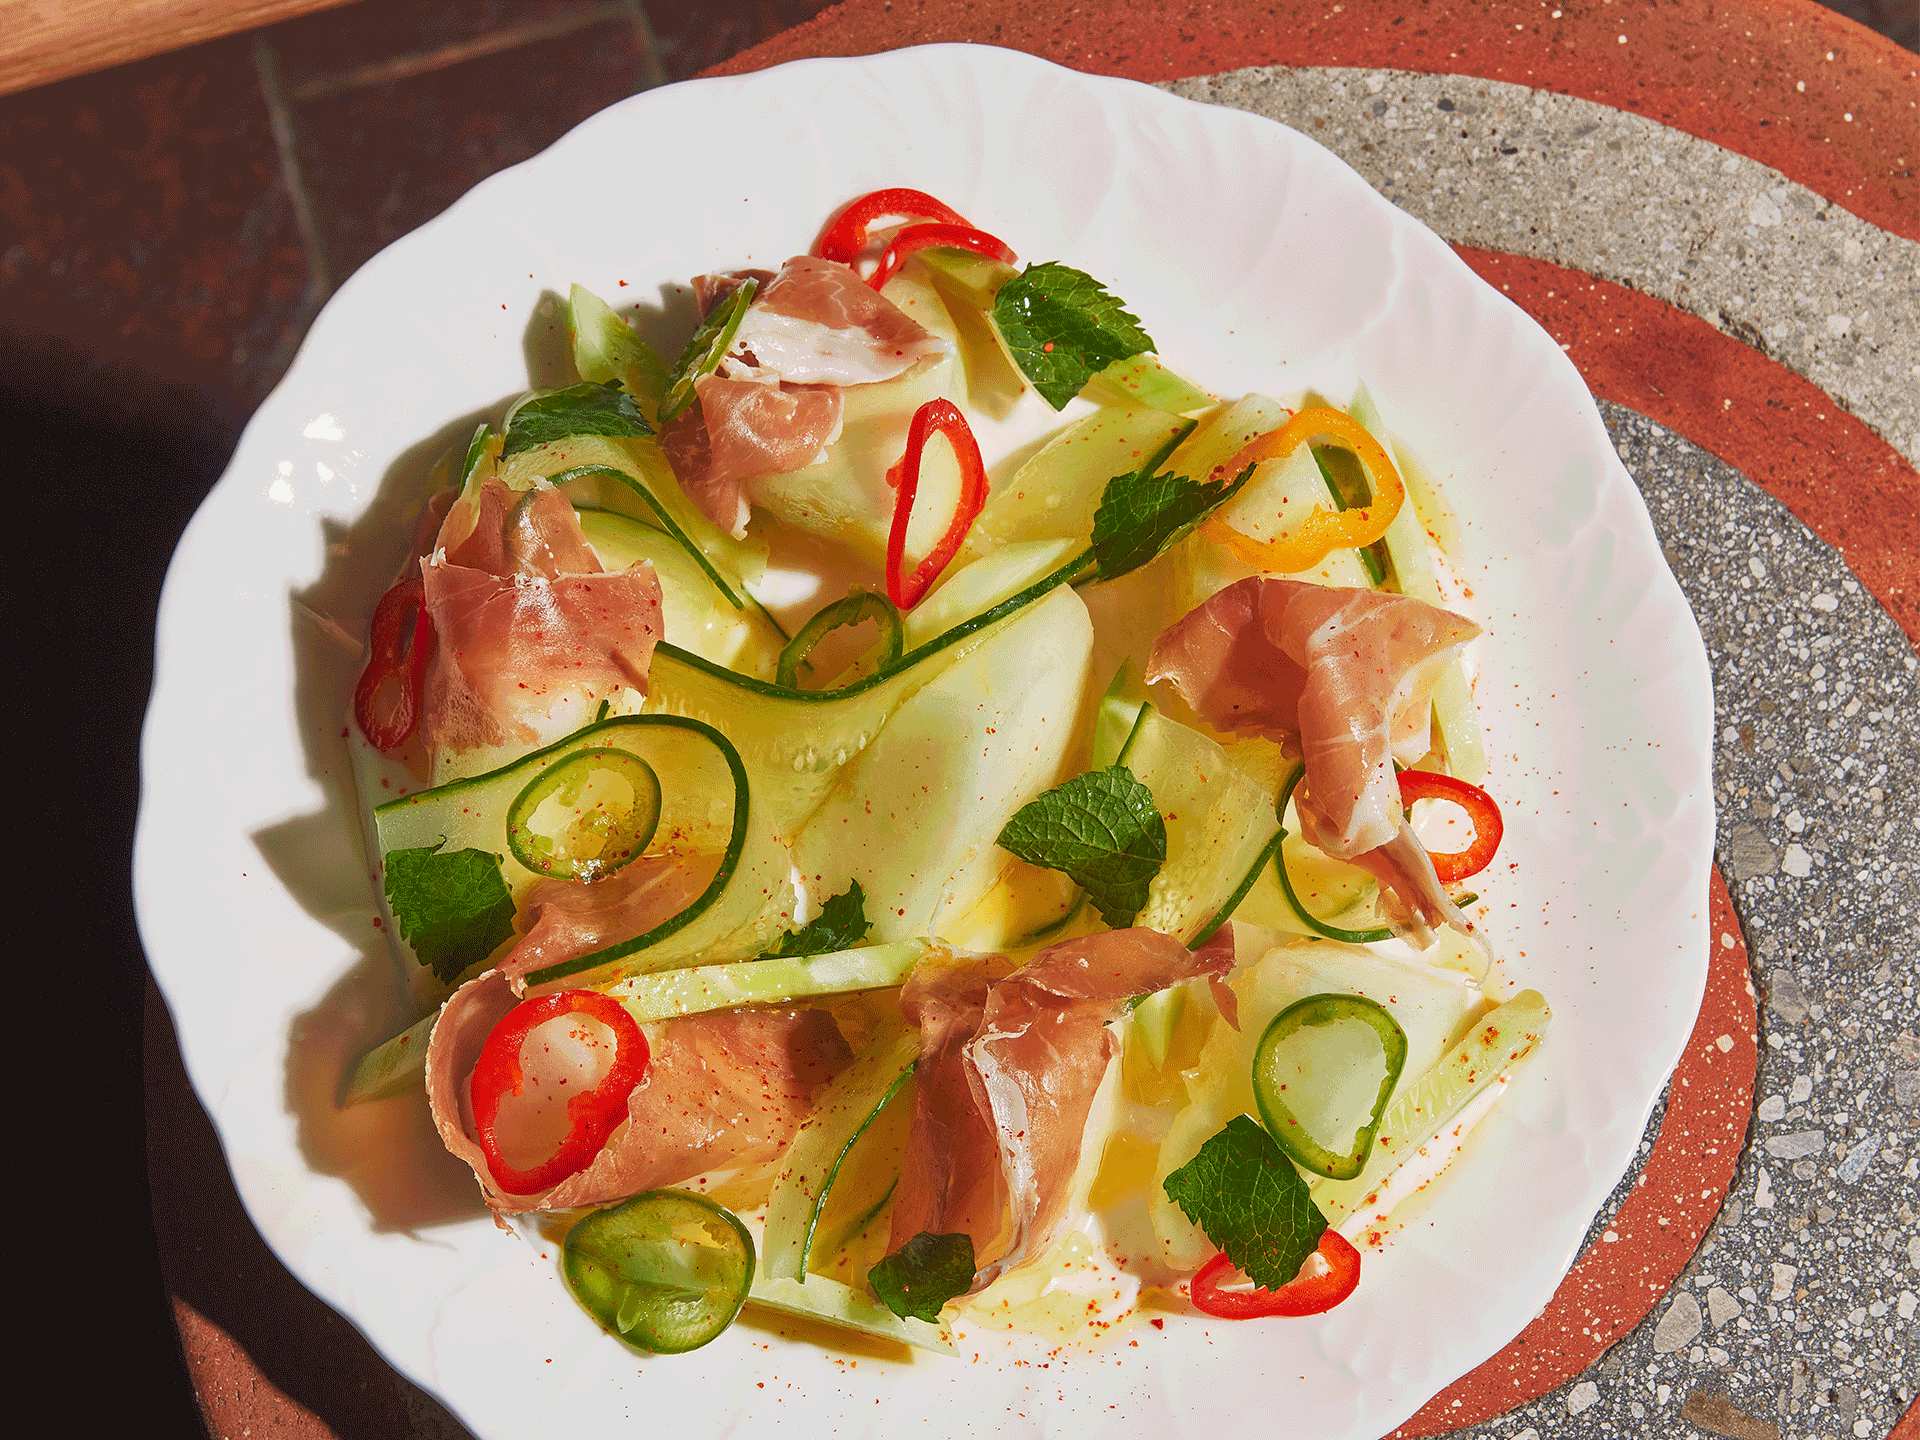 Best new restaurants Toronto | Alder's cucumber and melon salad